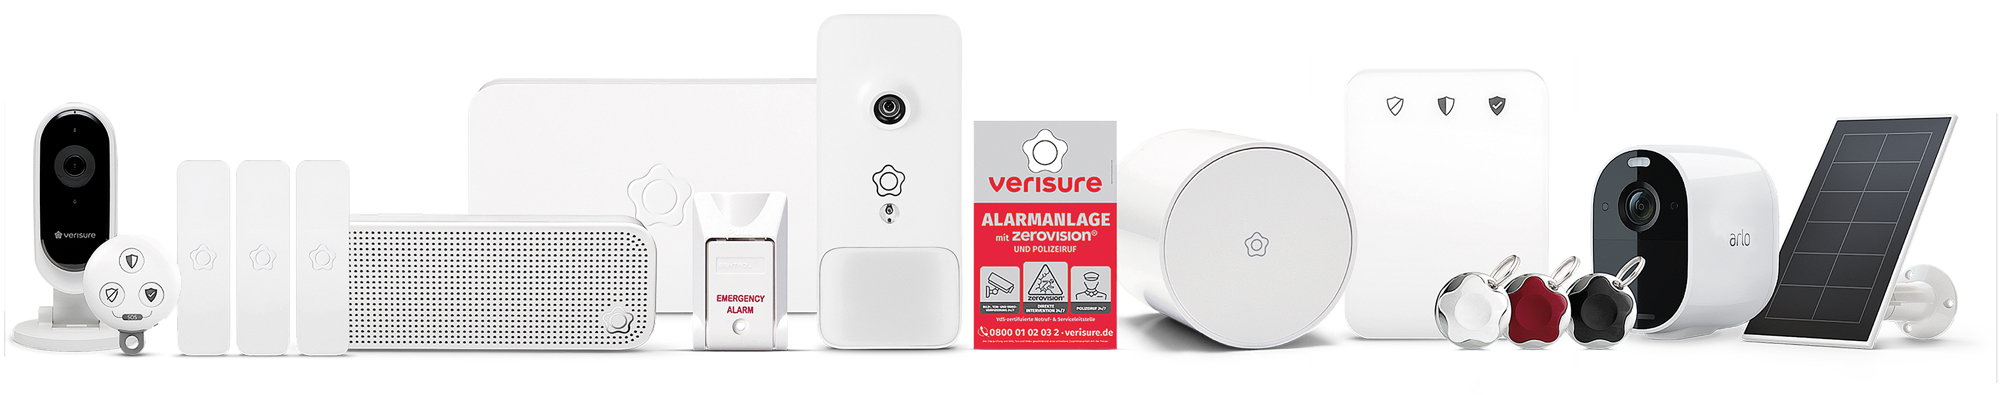 Verisure Alarm System with ZeroVision